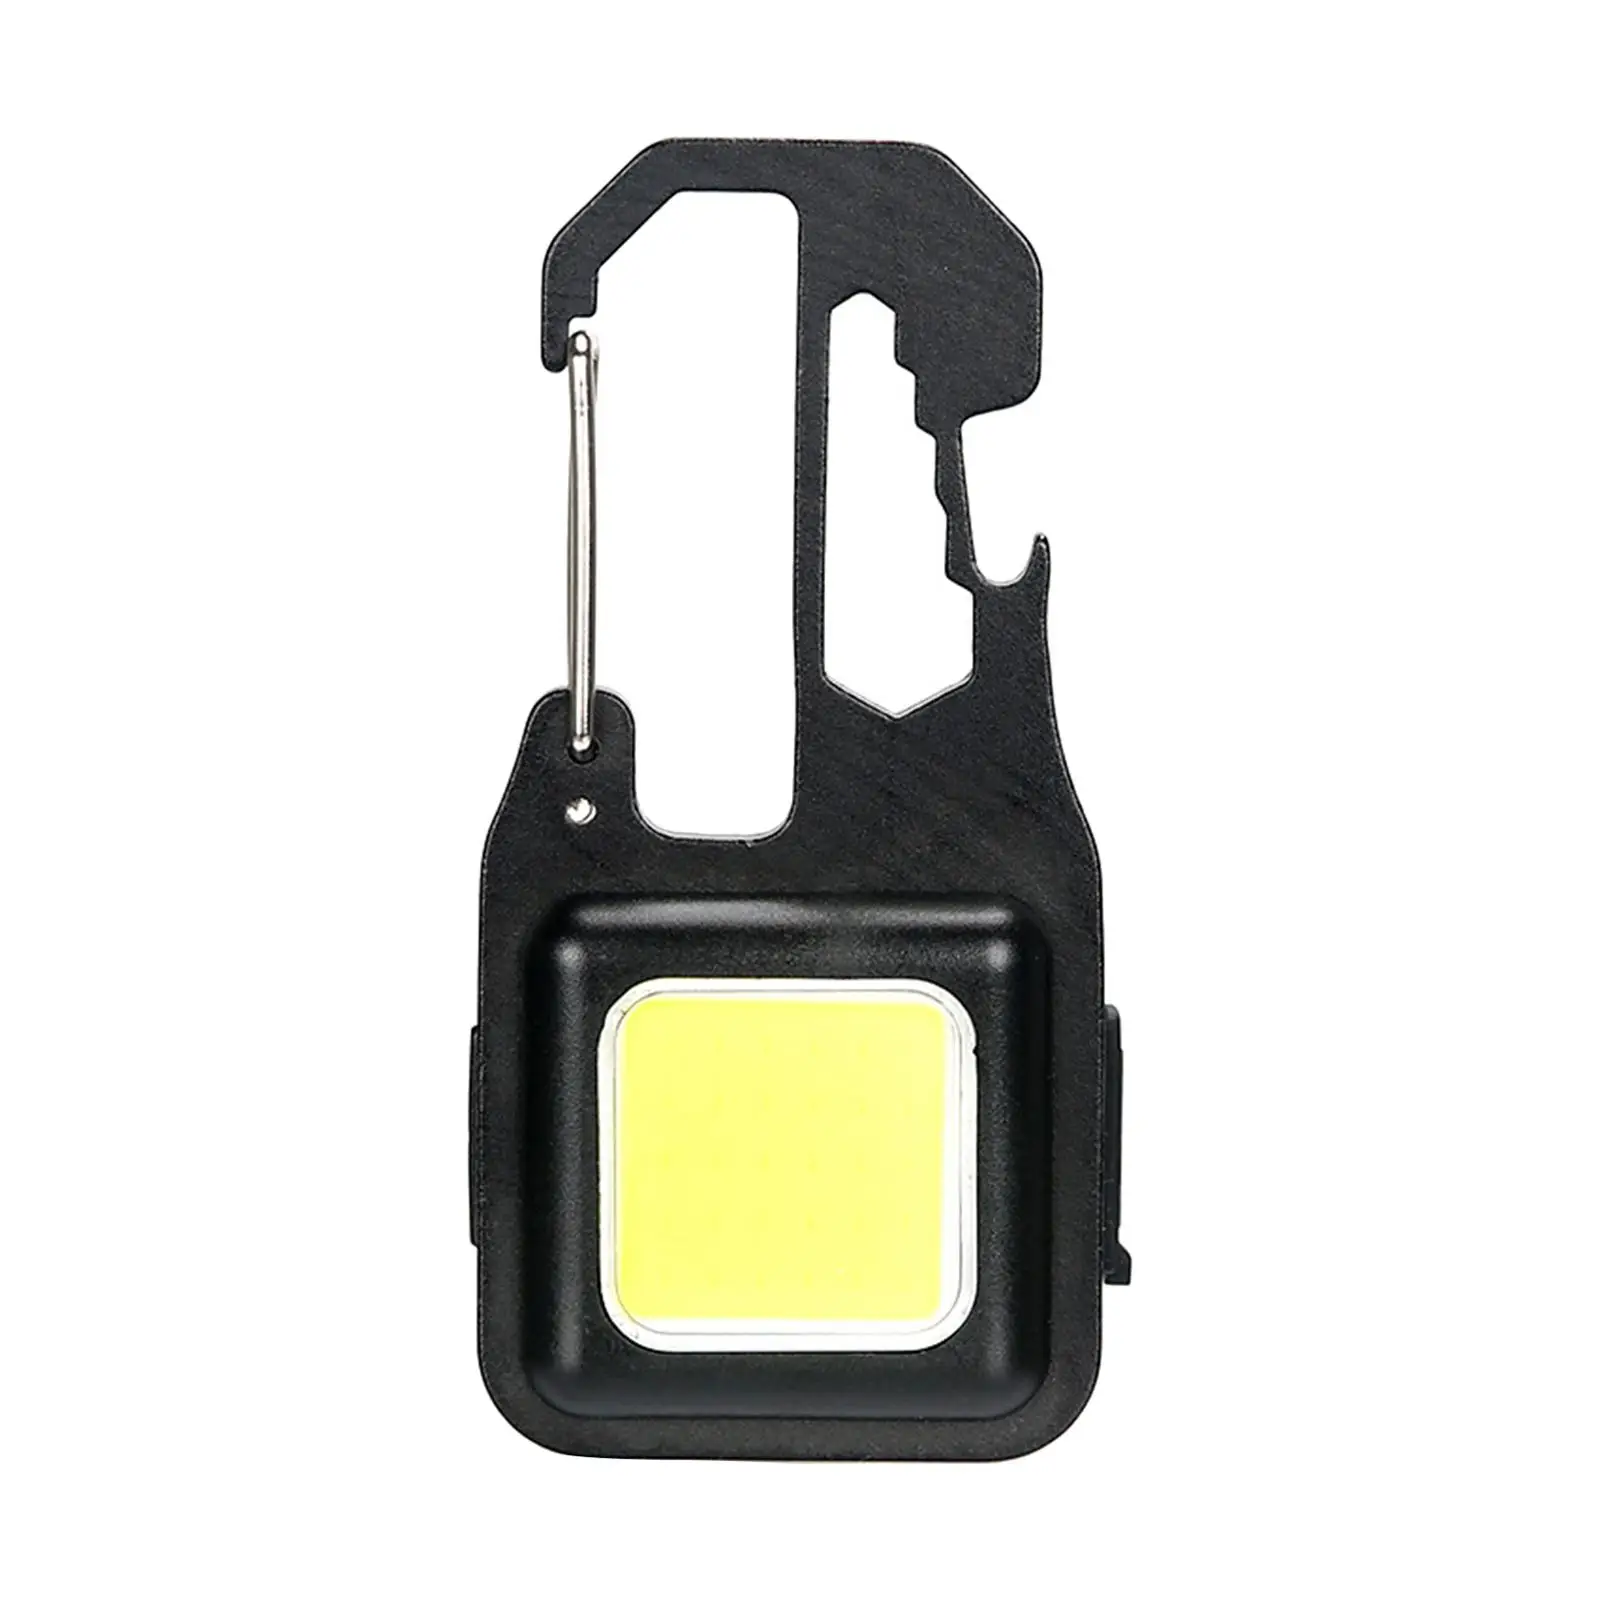 Portable COB flashlights Keychain Bottle Opener Camping Magnet Base Keyring Bright pocket USB Rechargeable Torch Light LED